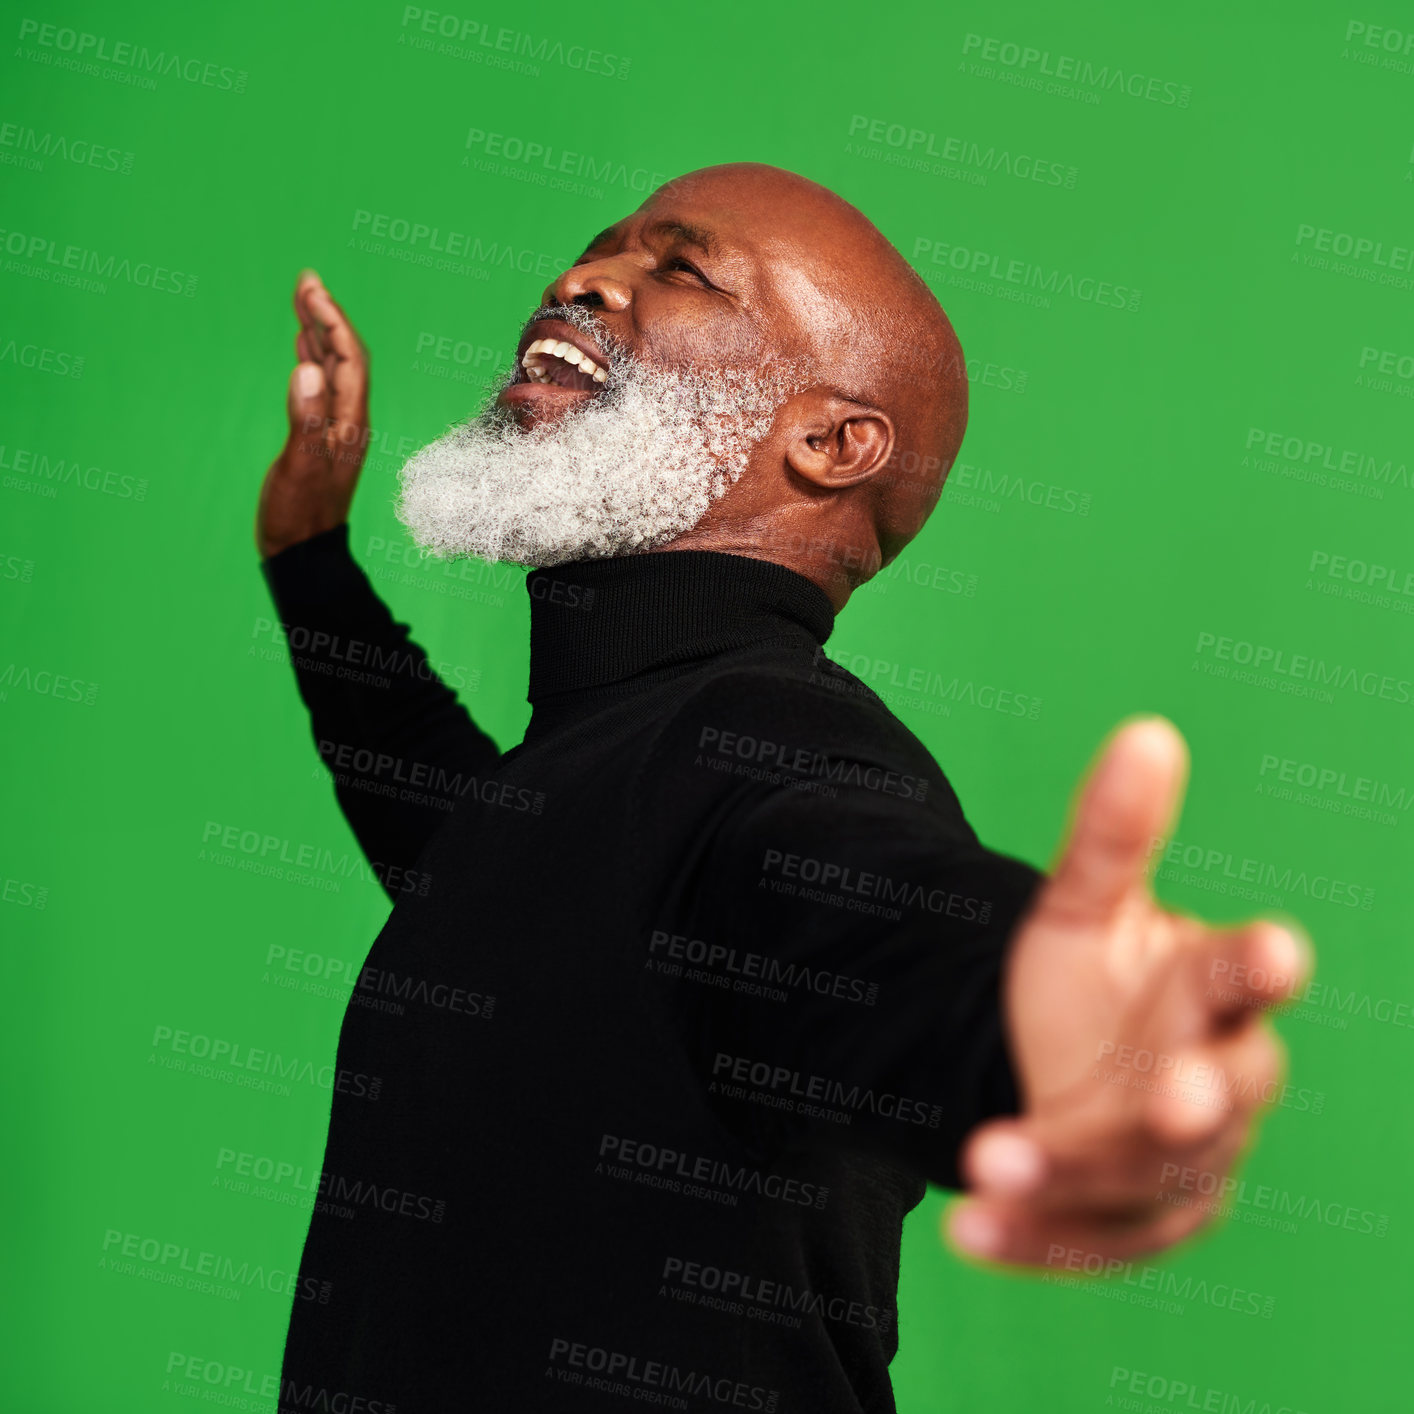 Buy stock photo Studio shot of a senior man posing against a green background